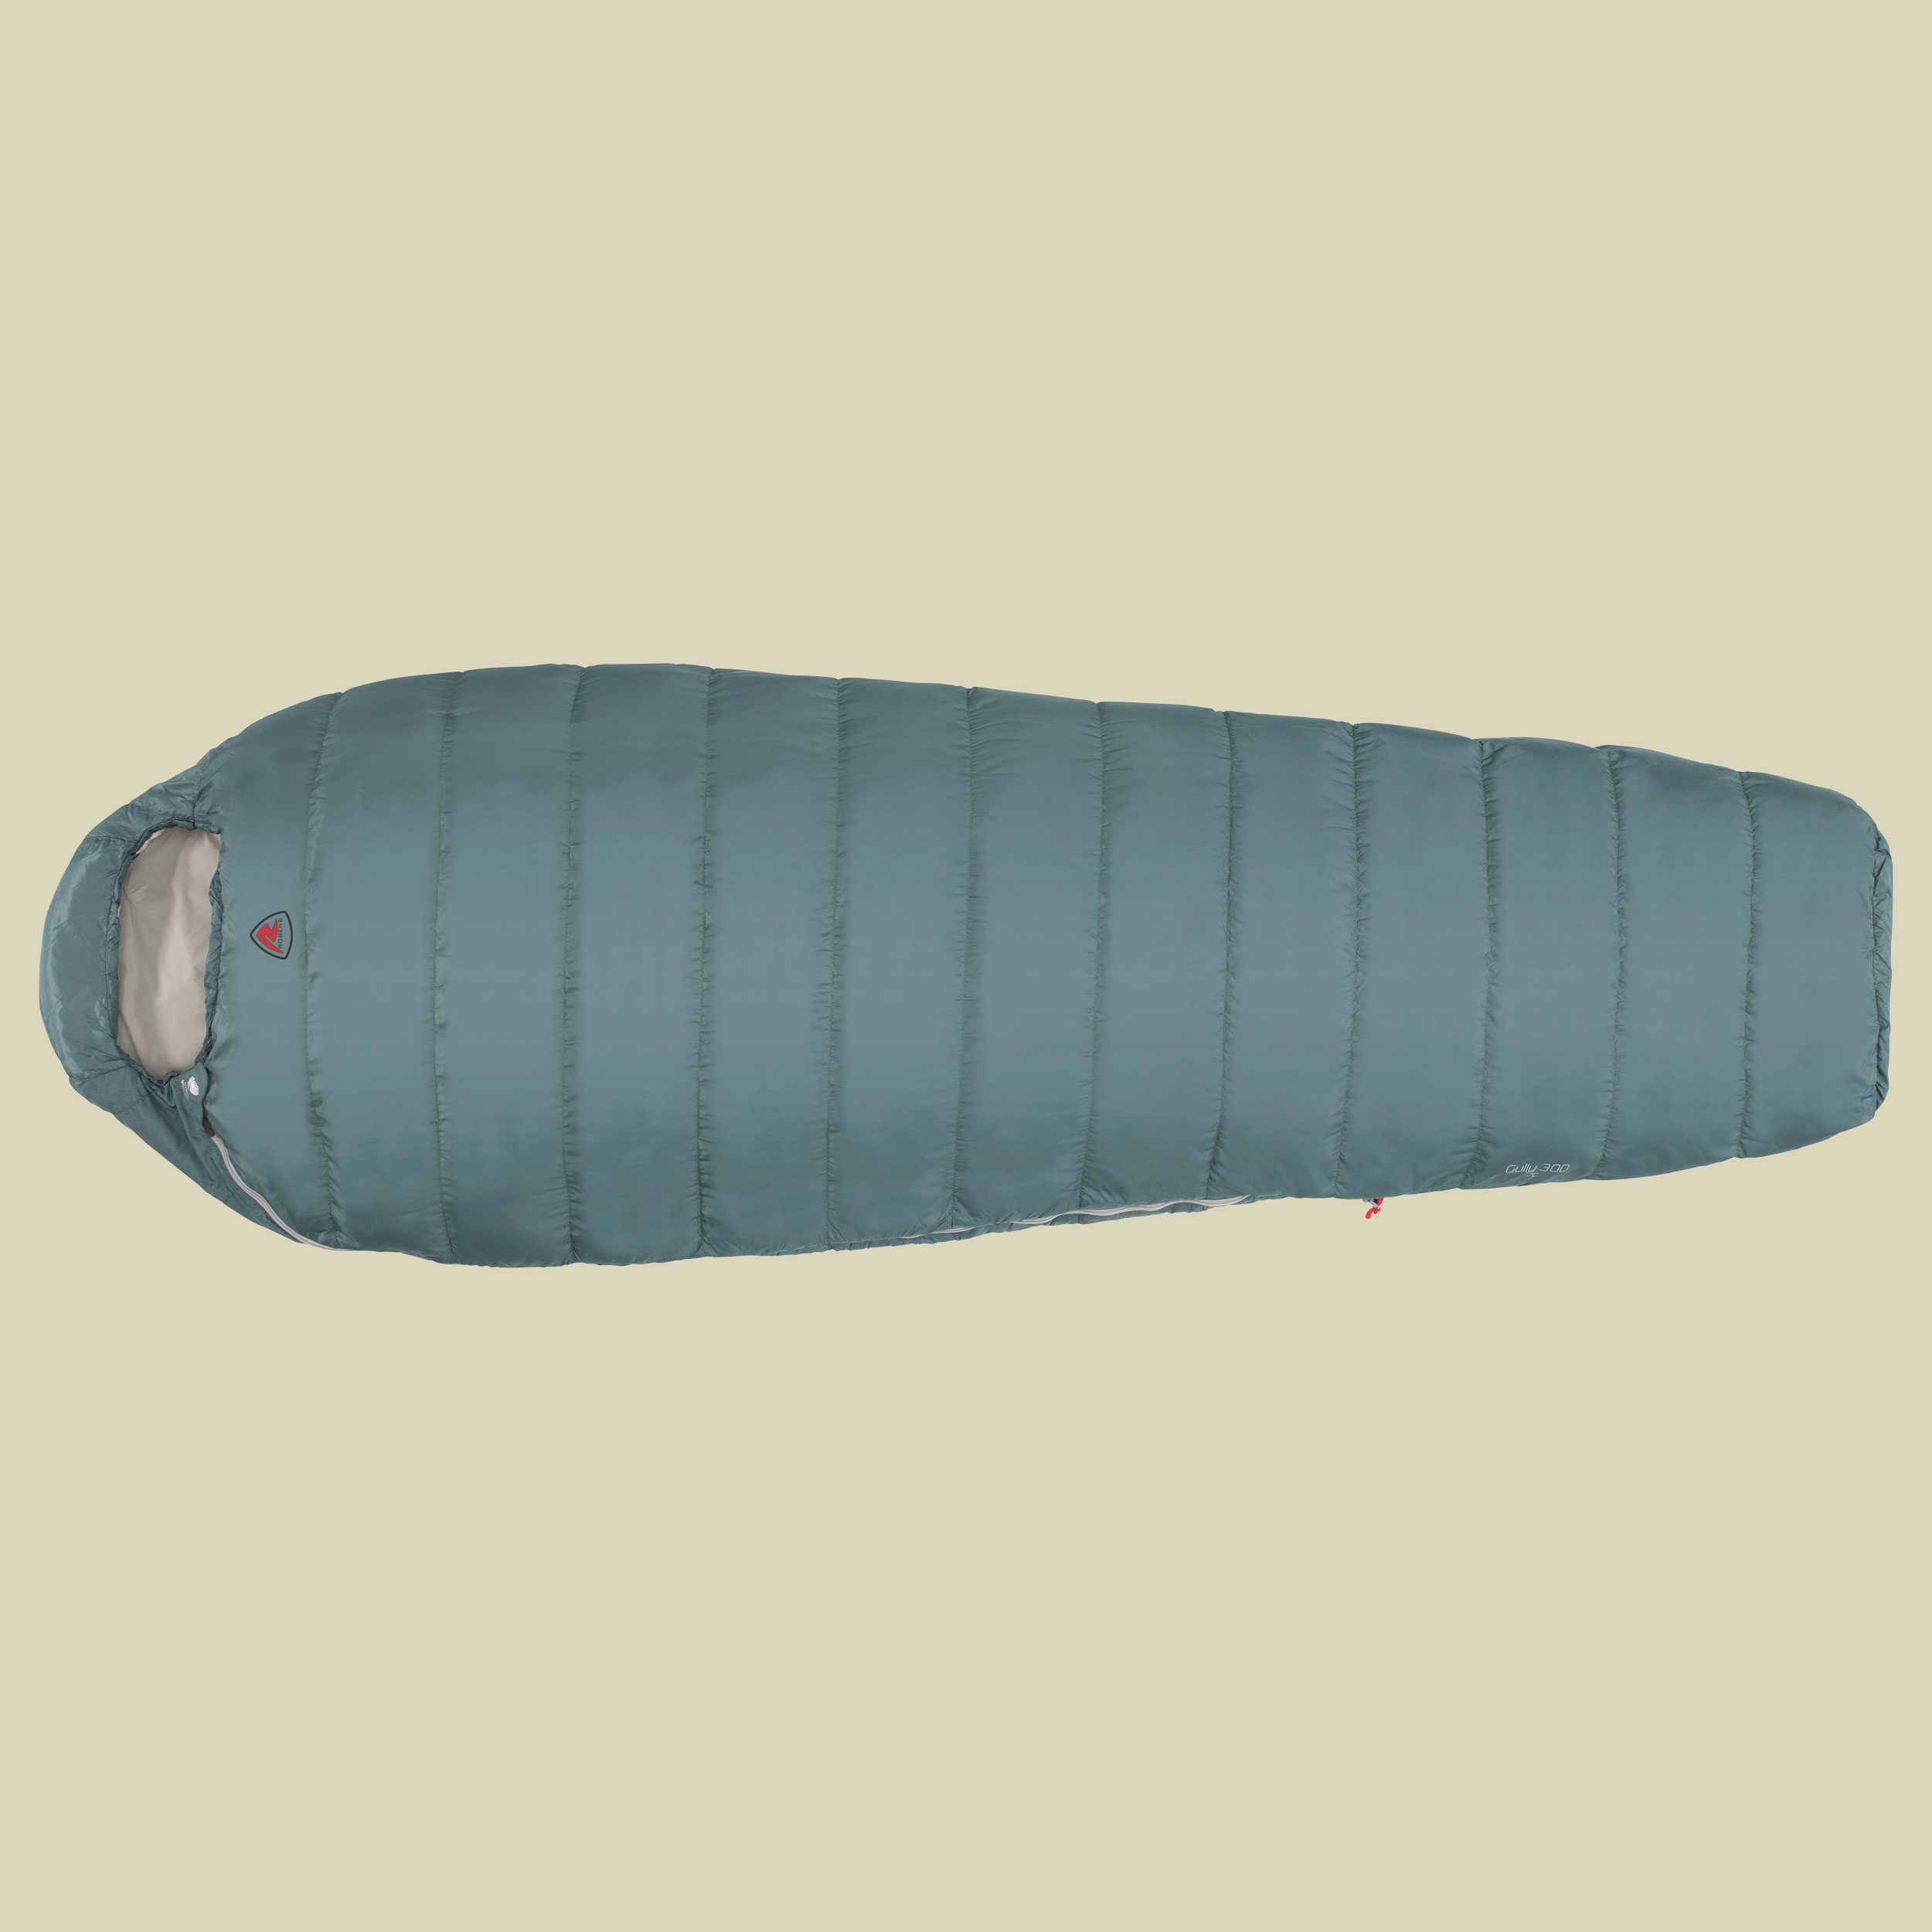 Gully 300 "L" bis Körpergröße: 195 cm Farbe: ocean blue; Reißverschluss links